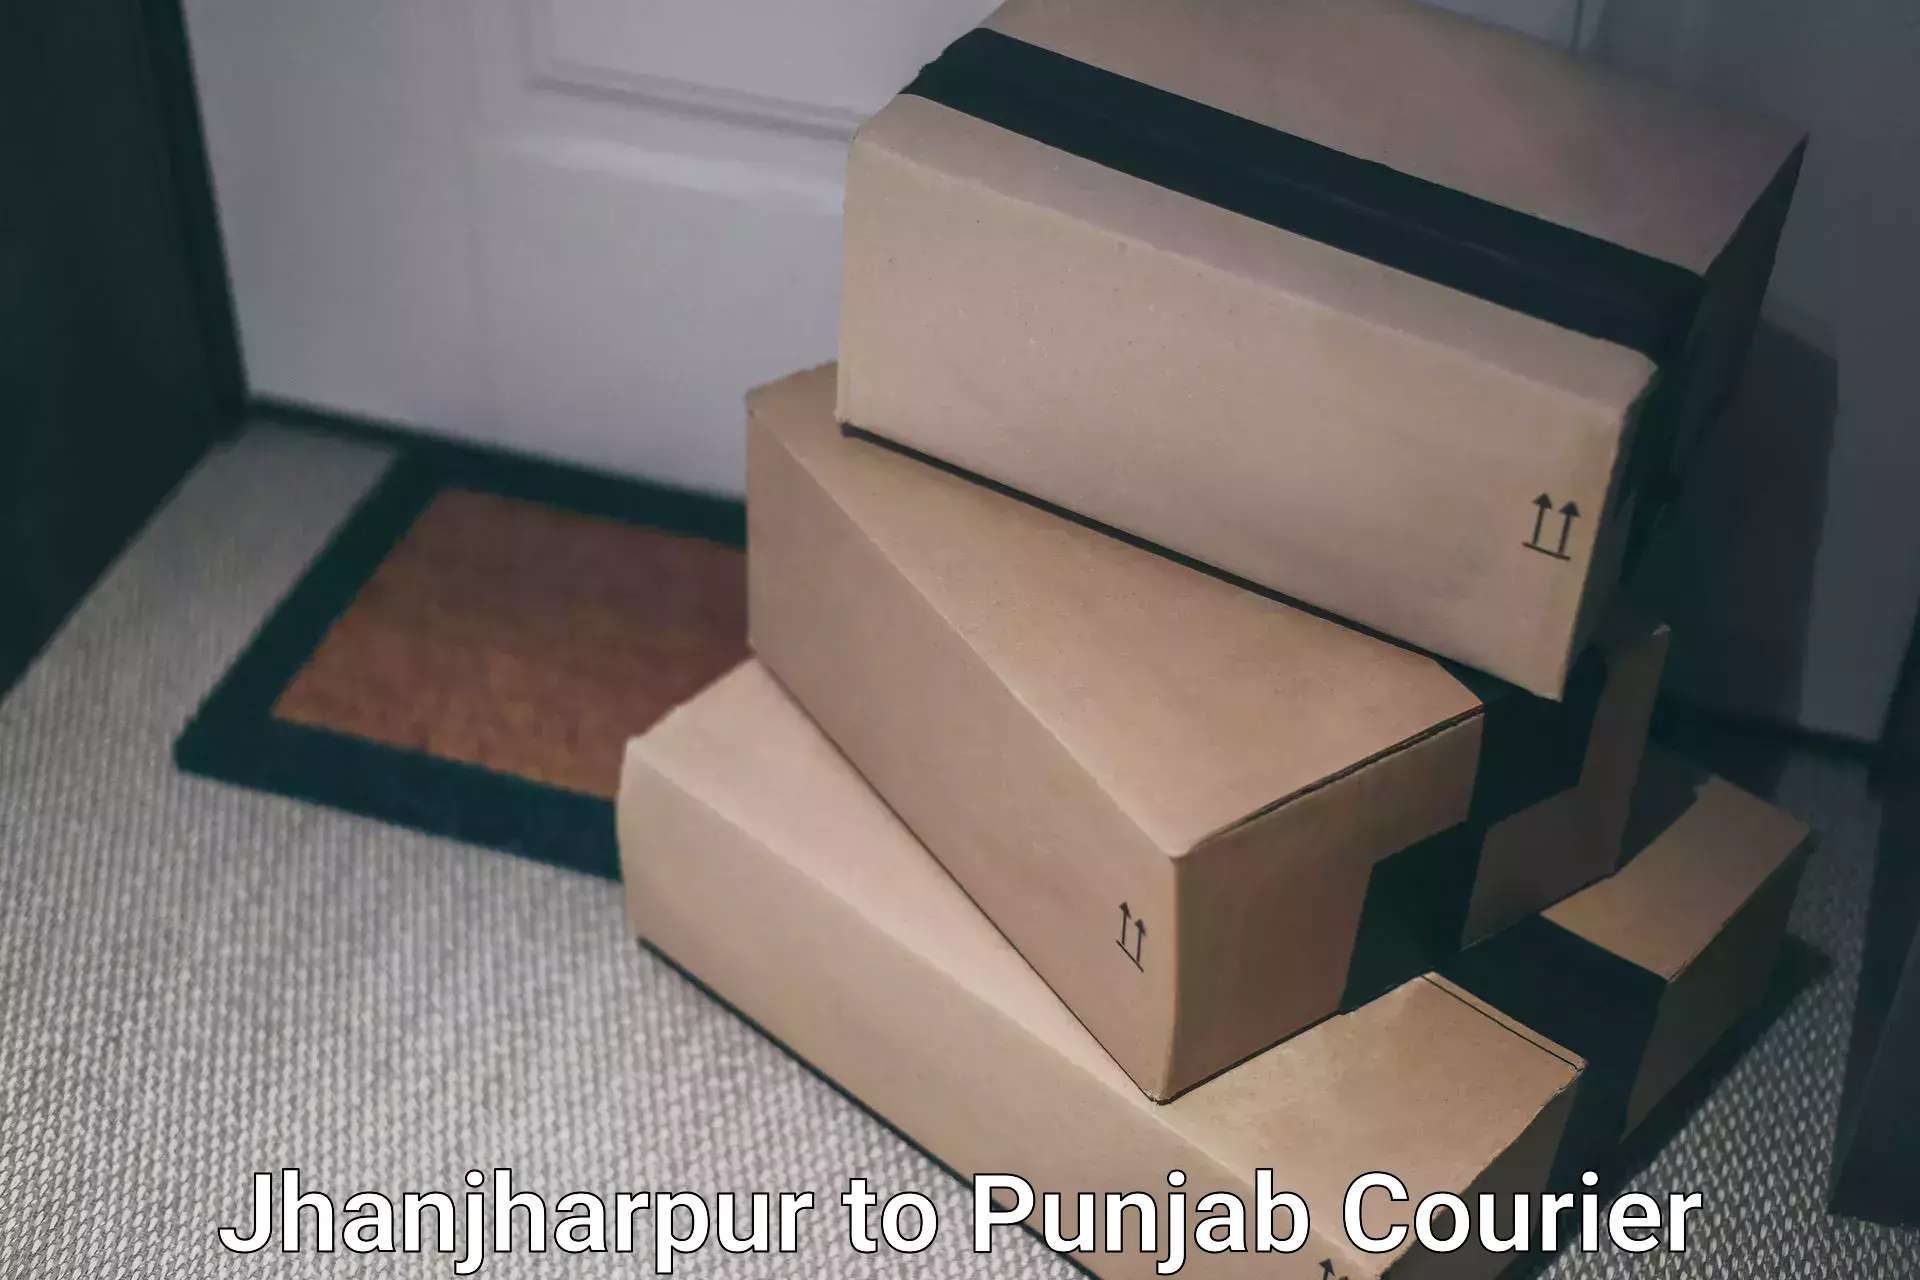 Courier service innovation Jhanjharpur to Punjab